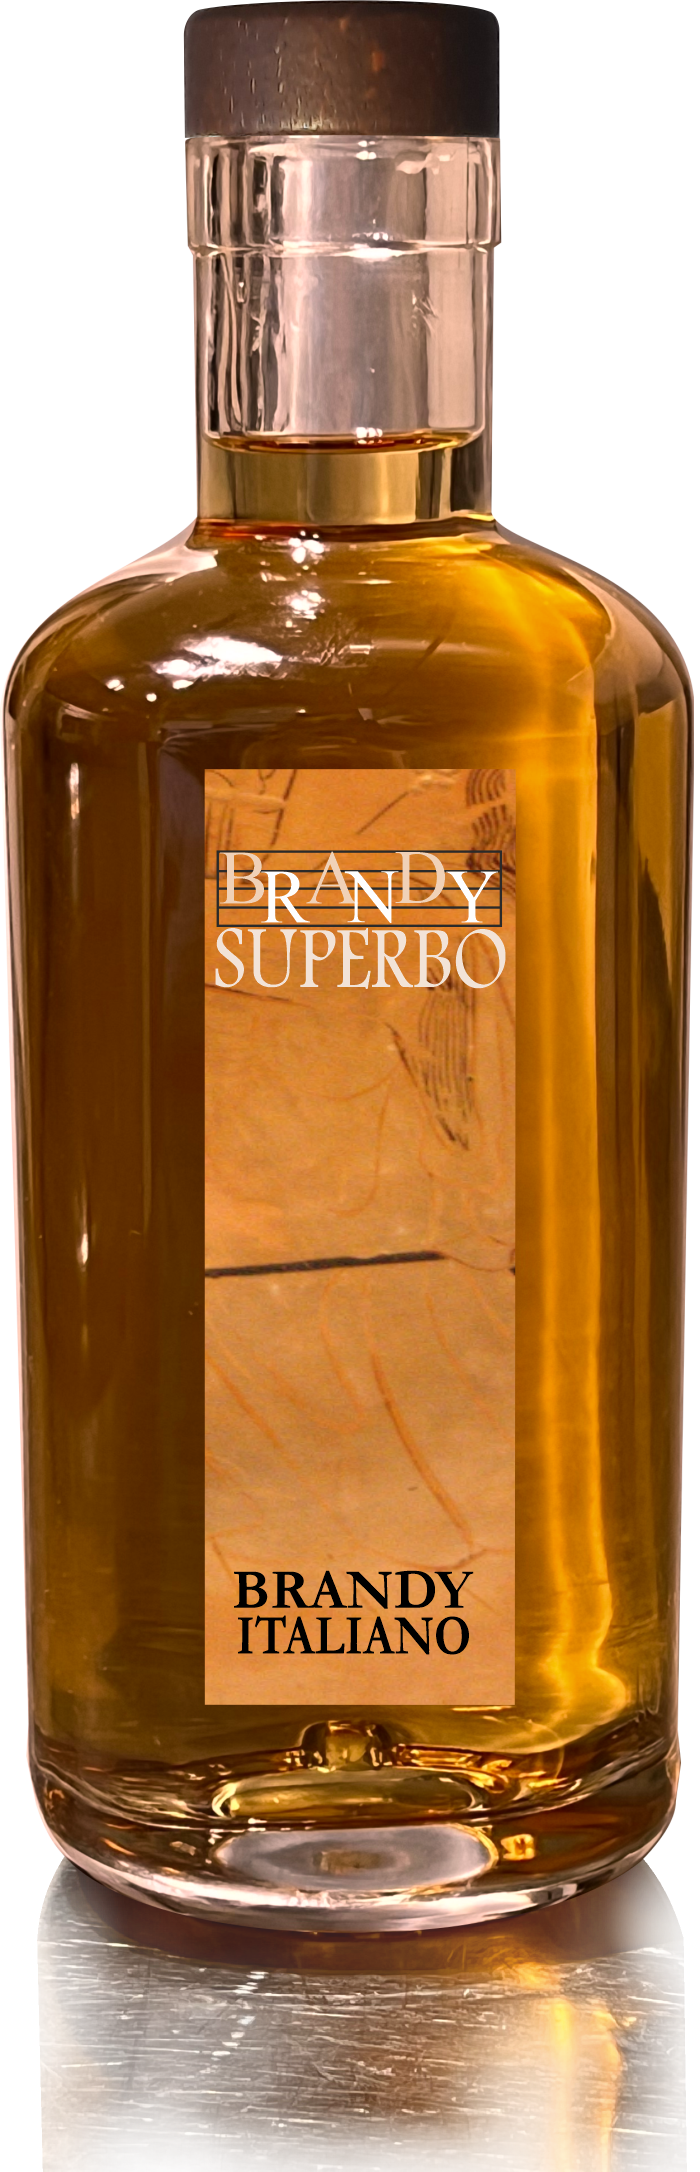 brandy superbo valle del marta